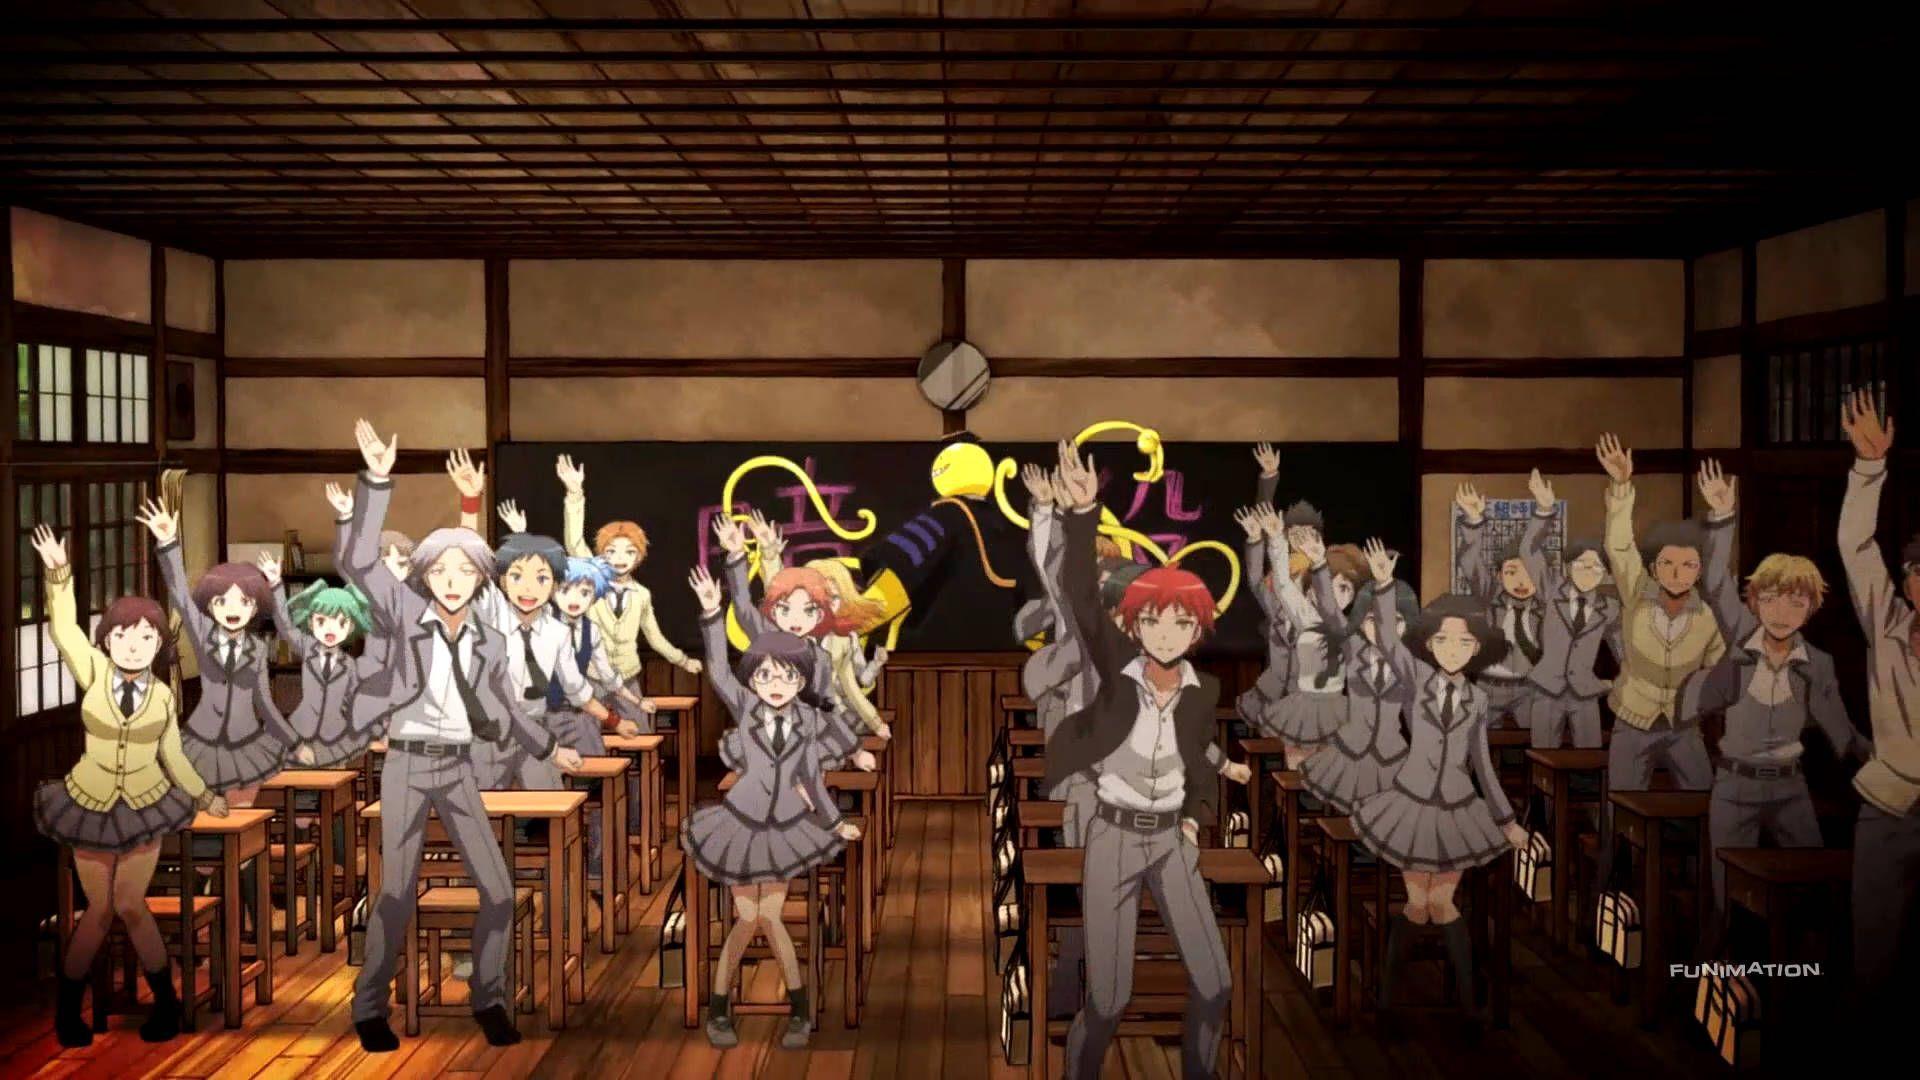 Assassination Classroom 4k Wallpaper Download For Pc, Assassination Classroom, Anime